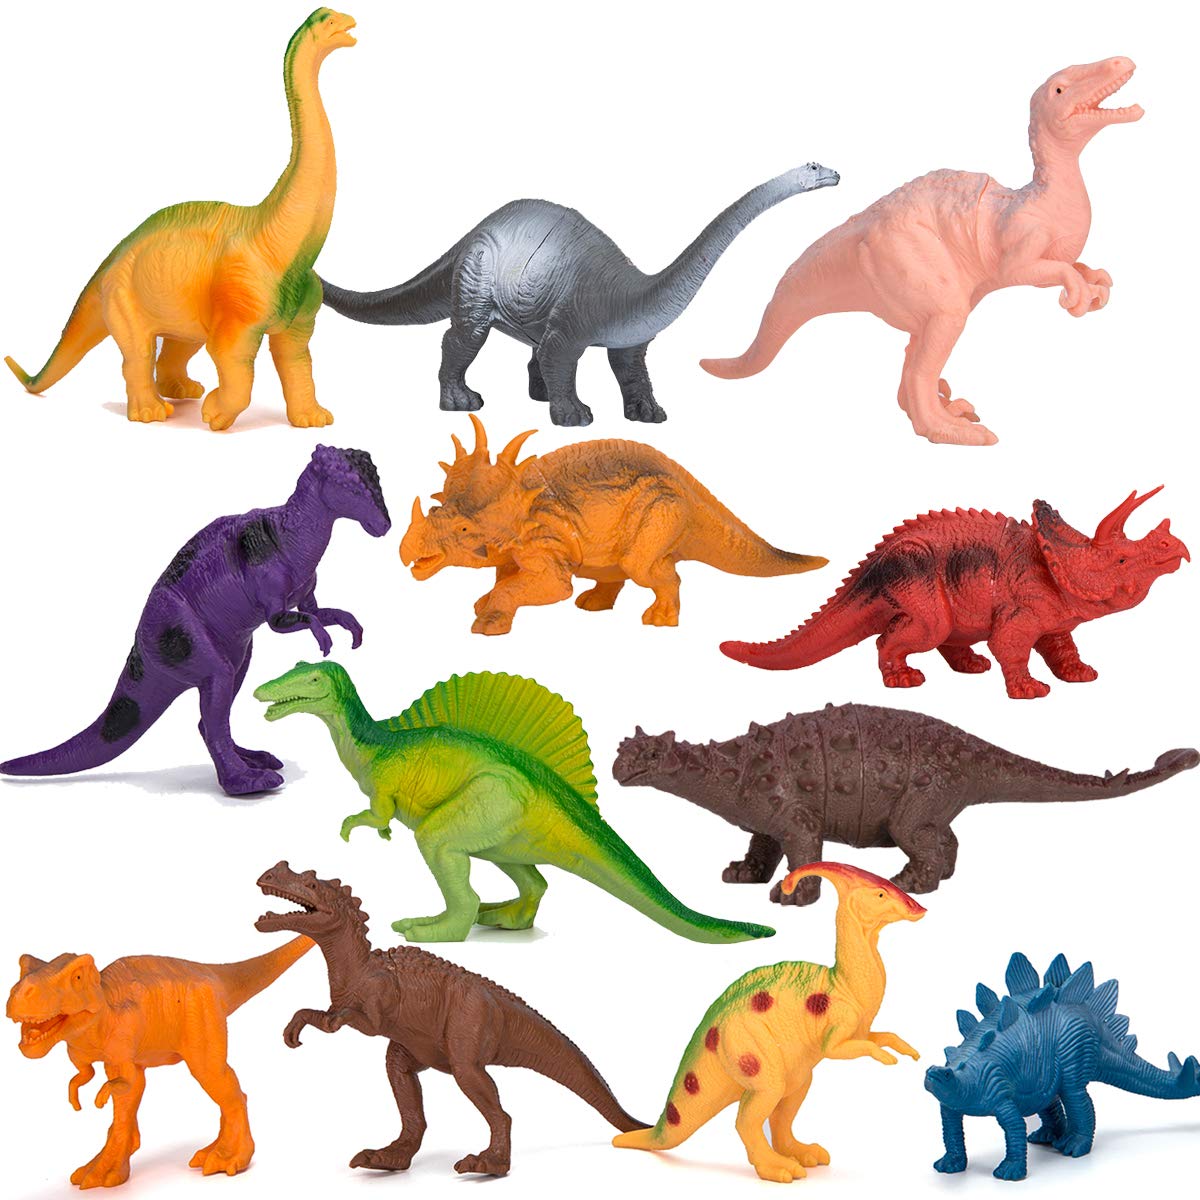 Kids Dinosaur Figures Toys, 7 Inch Jumbo Plastic Dinosaur Playset, STEM Educational Realistic Dinosaur Figurine for Boys Girls Toddlers Including T-Rex, Stegosaurus, Triceratops, Monoclonius, 12 Pack